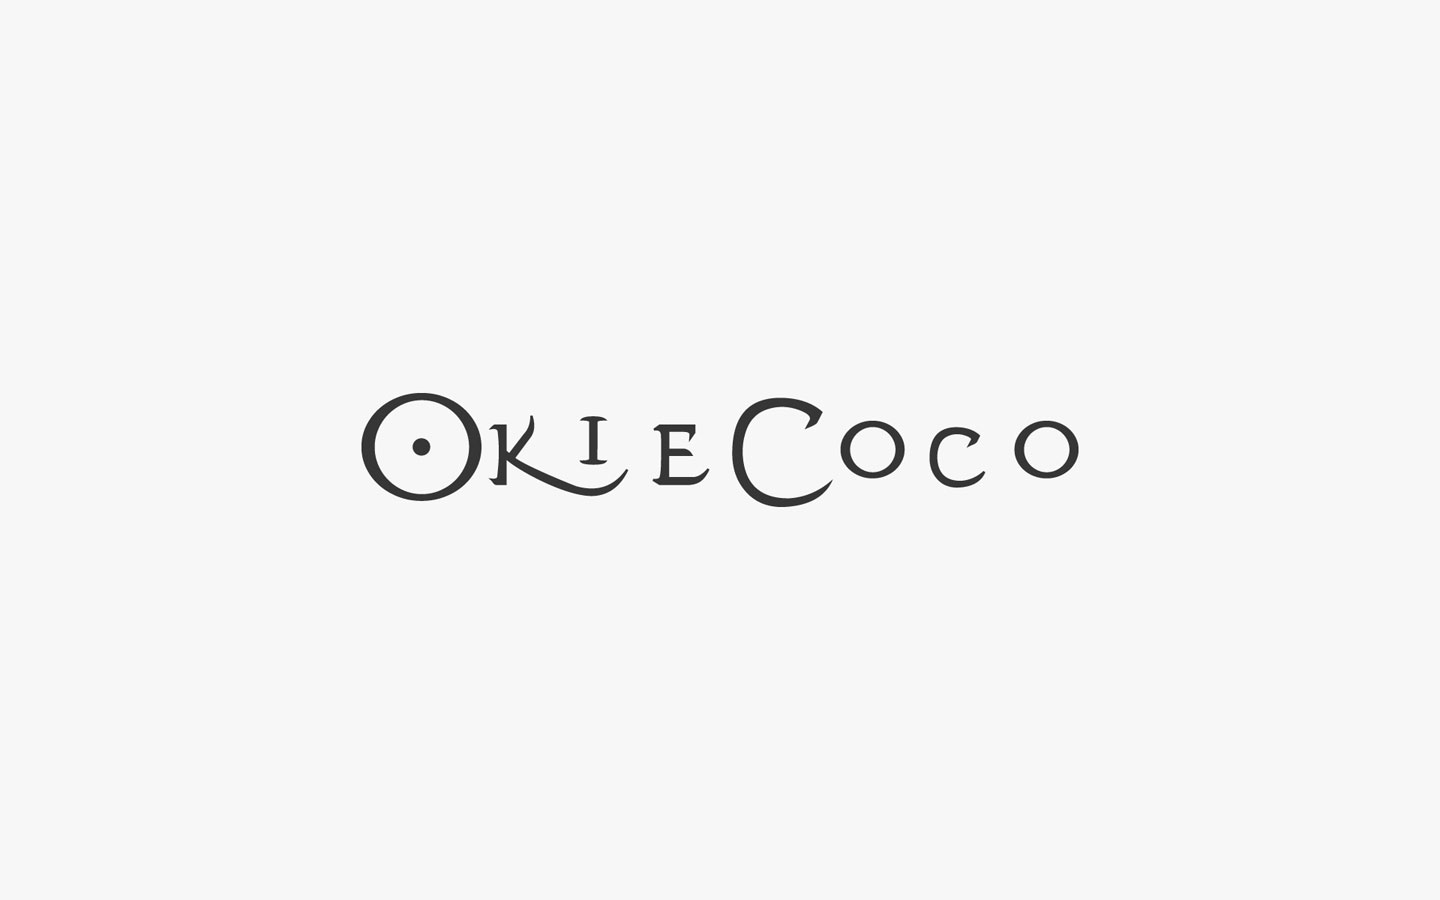 Okie Coco Chocolate Cafe, Logo Design in Mono